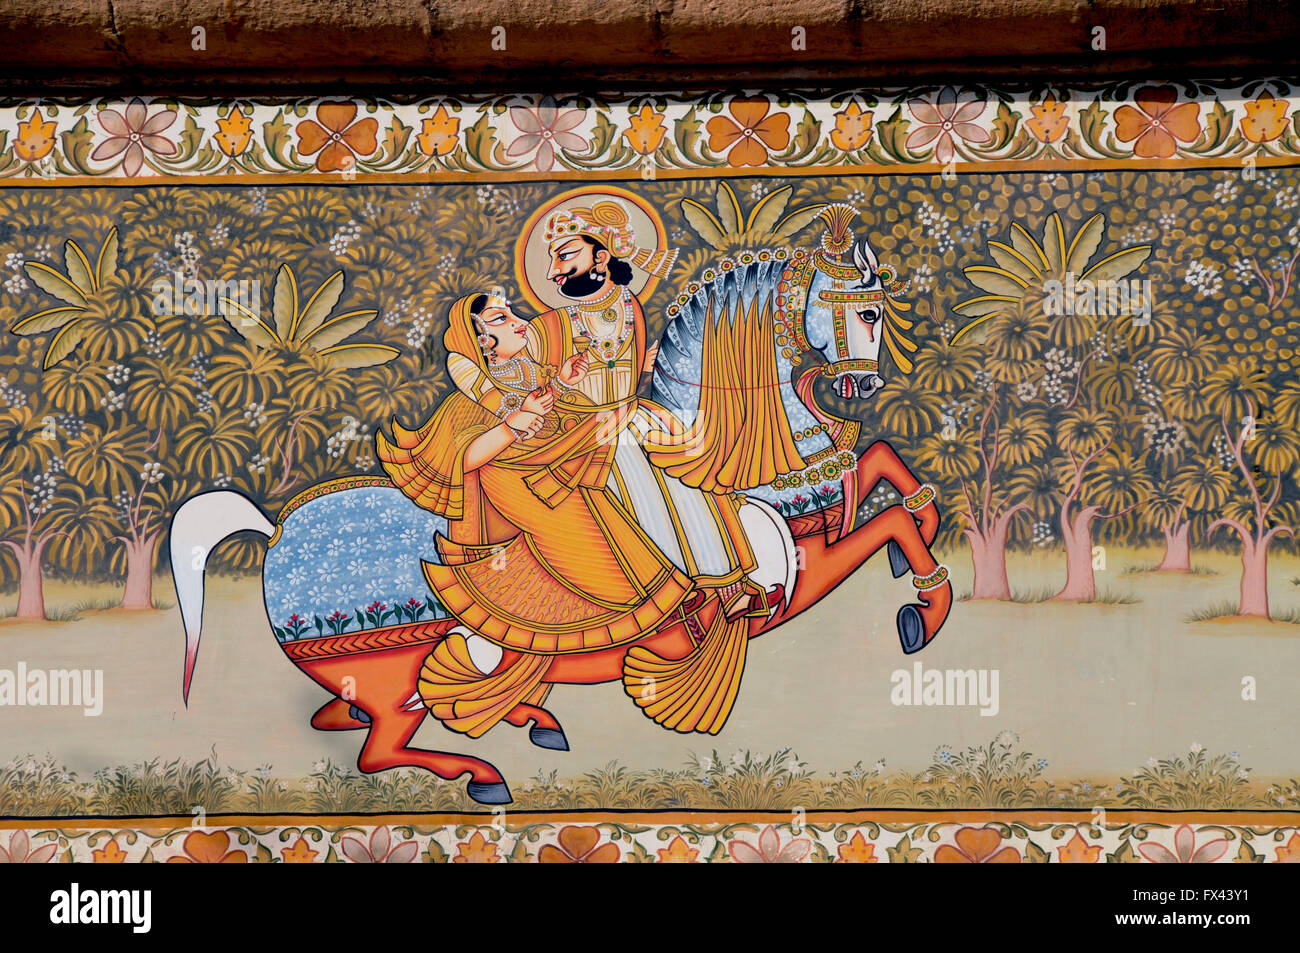 Detail from a wall decorative painting at Meterangarth Fort, Jodhpur, Rajasthan, India. Stock Photo